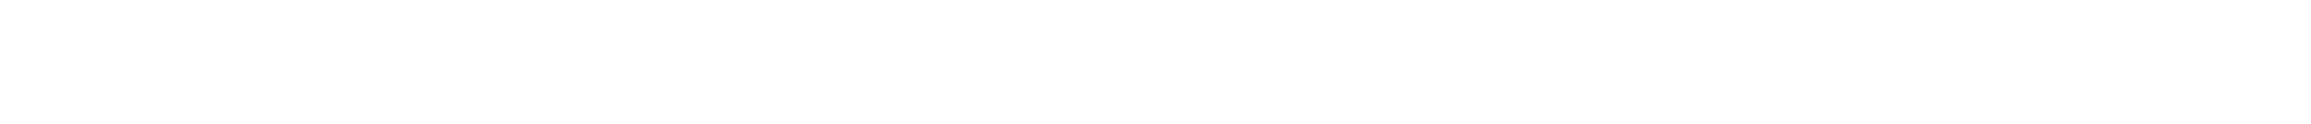 The world university rankings logo